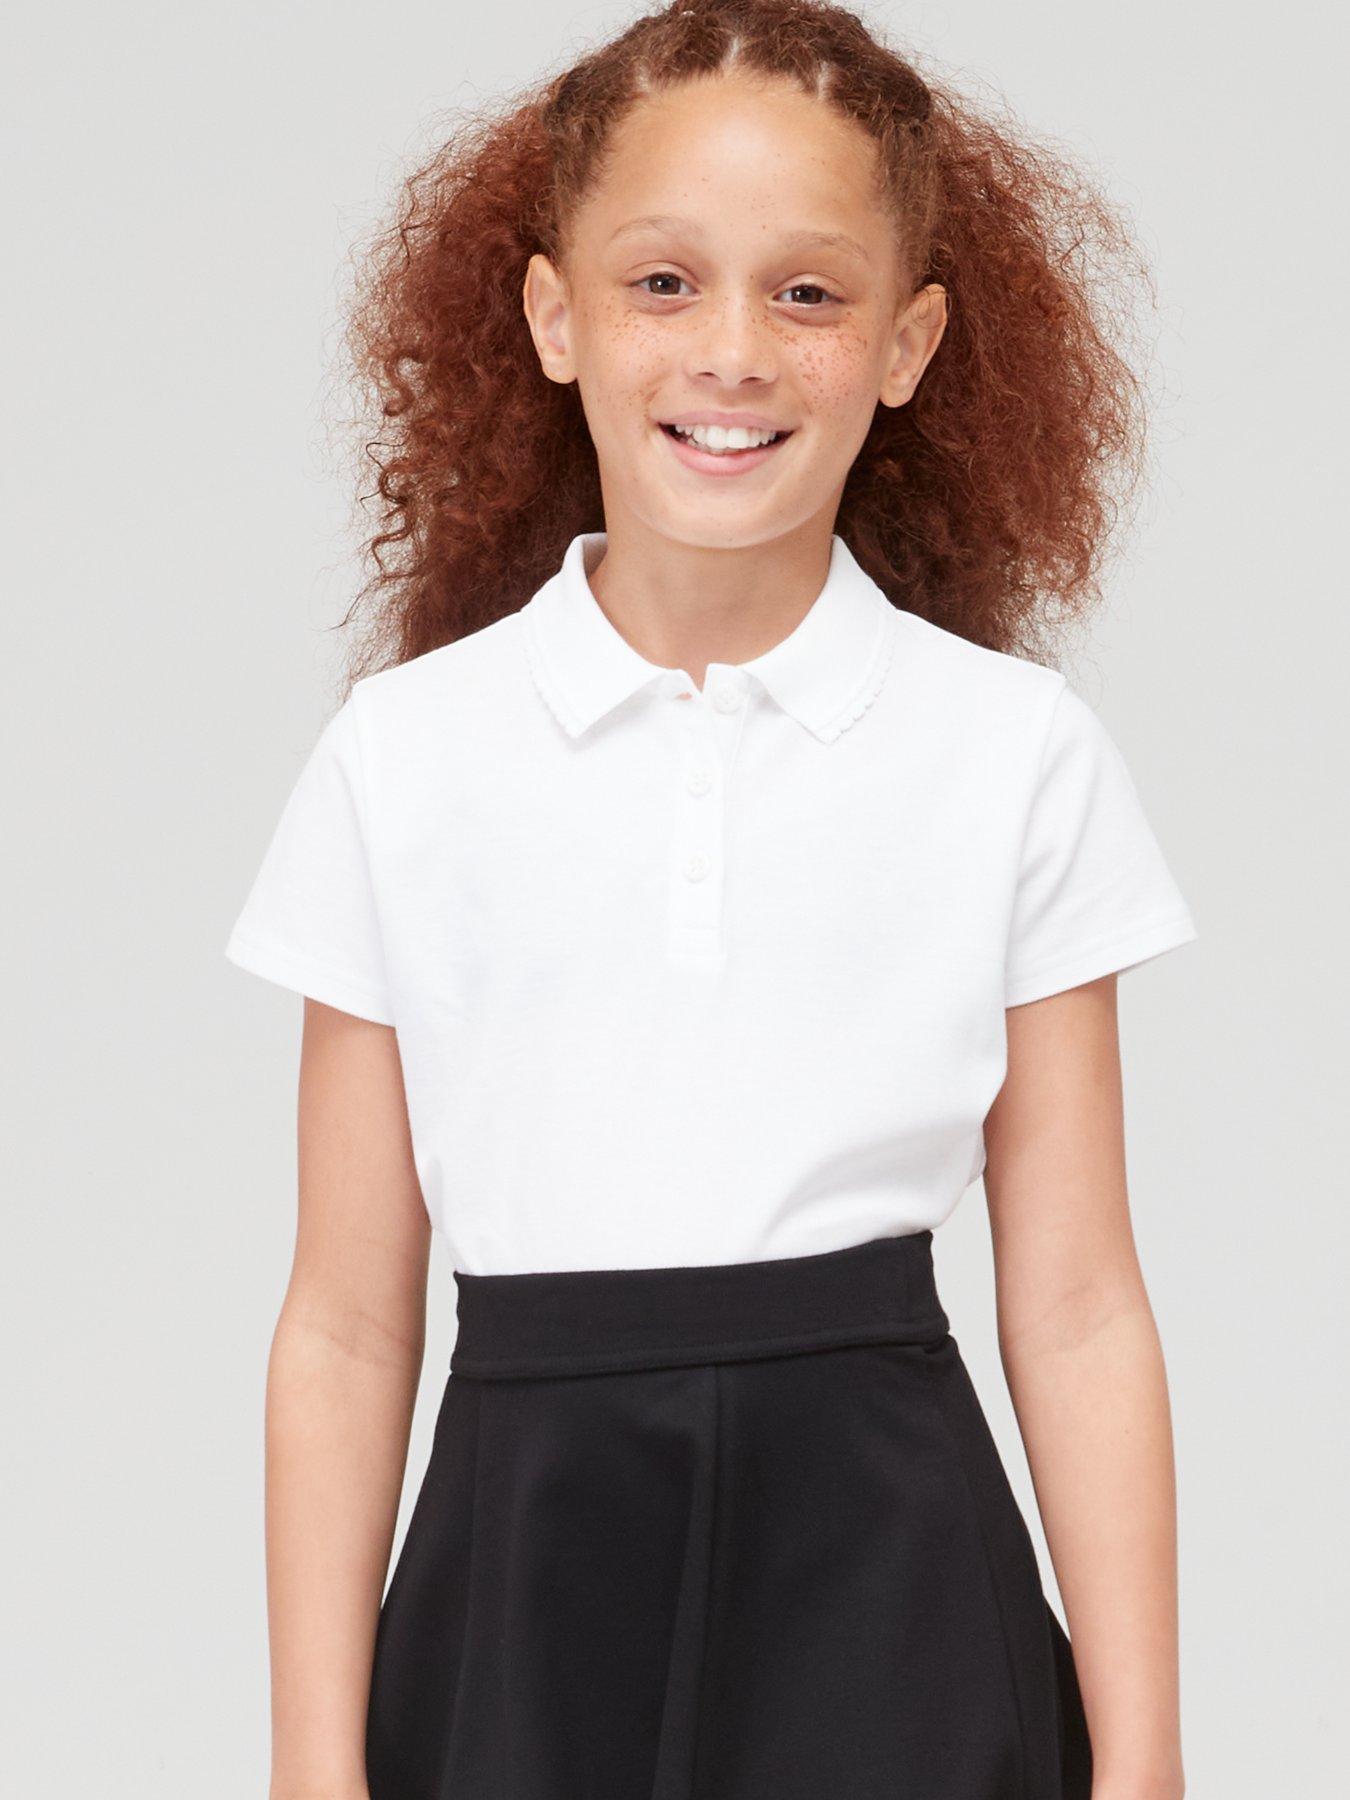  A2Z 4 Kids Cotton Rich 6 Pack Uniform School Tights